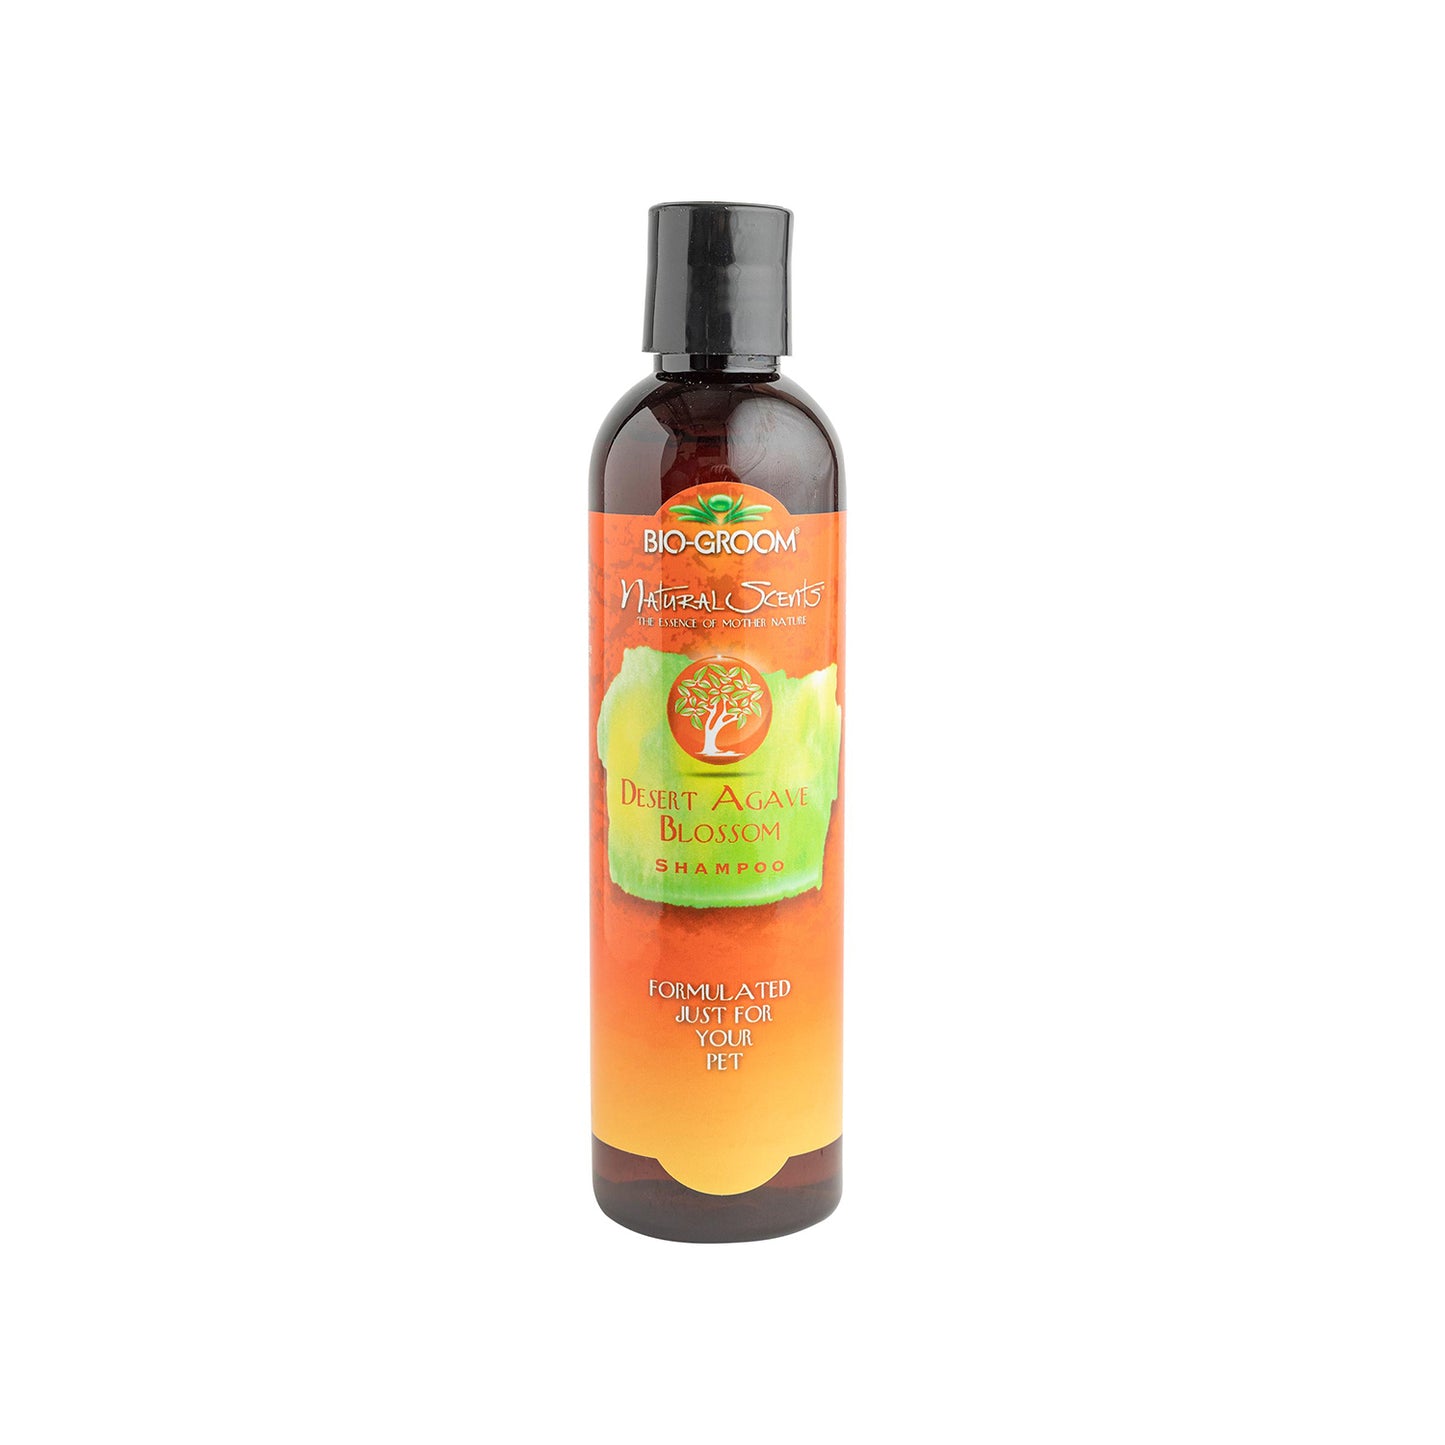 Bio Groom - Natural Scents Desert Agave Blossom Shampoo, 110 ml